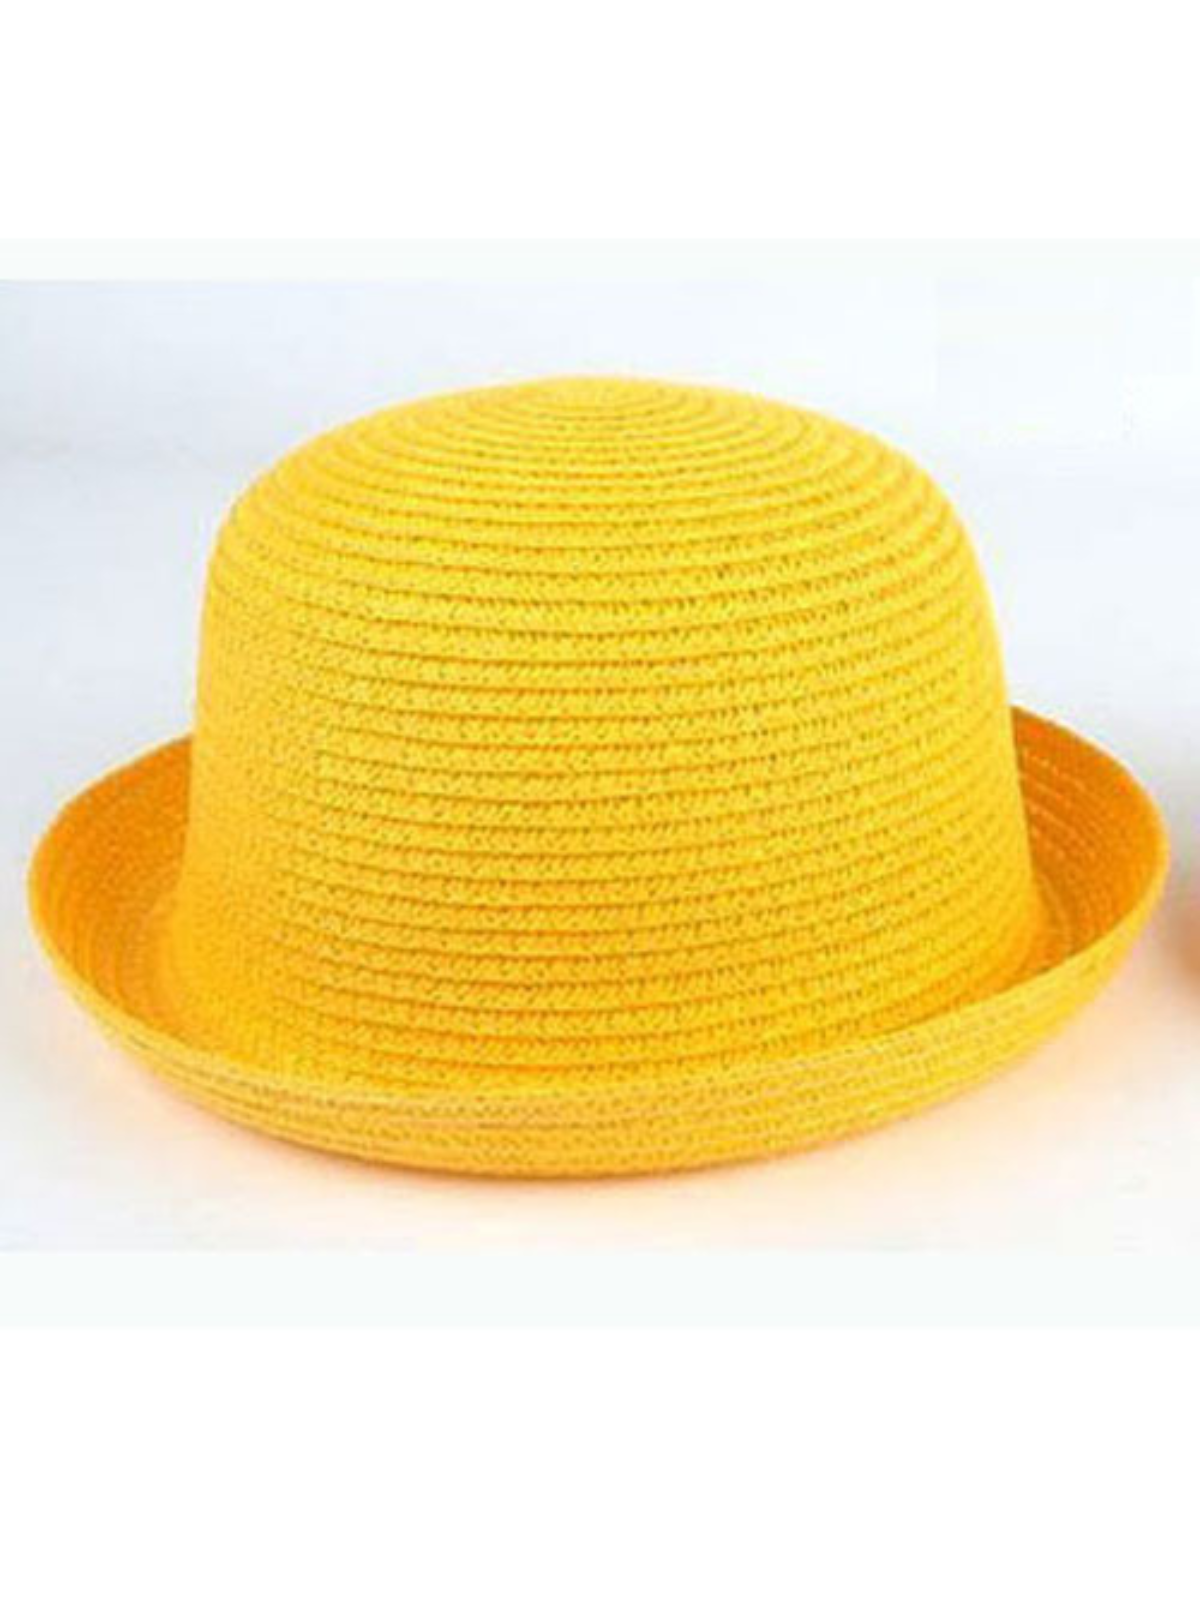 Runway-Ready Yellow Bowler Hat